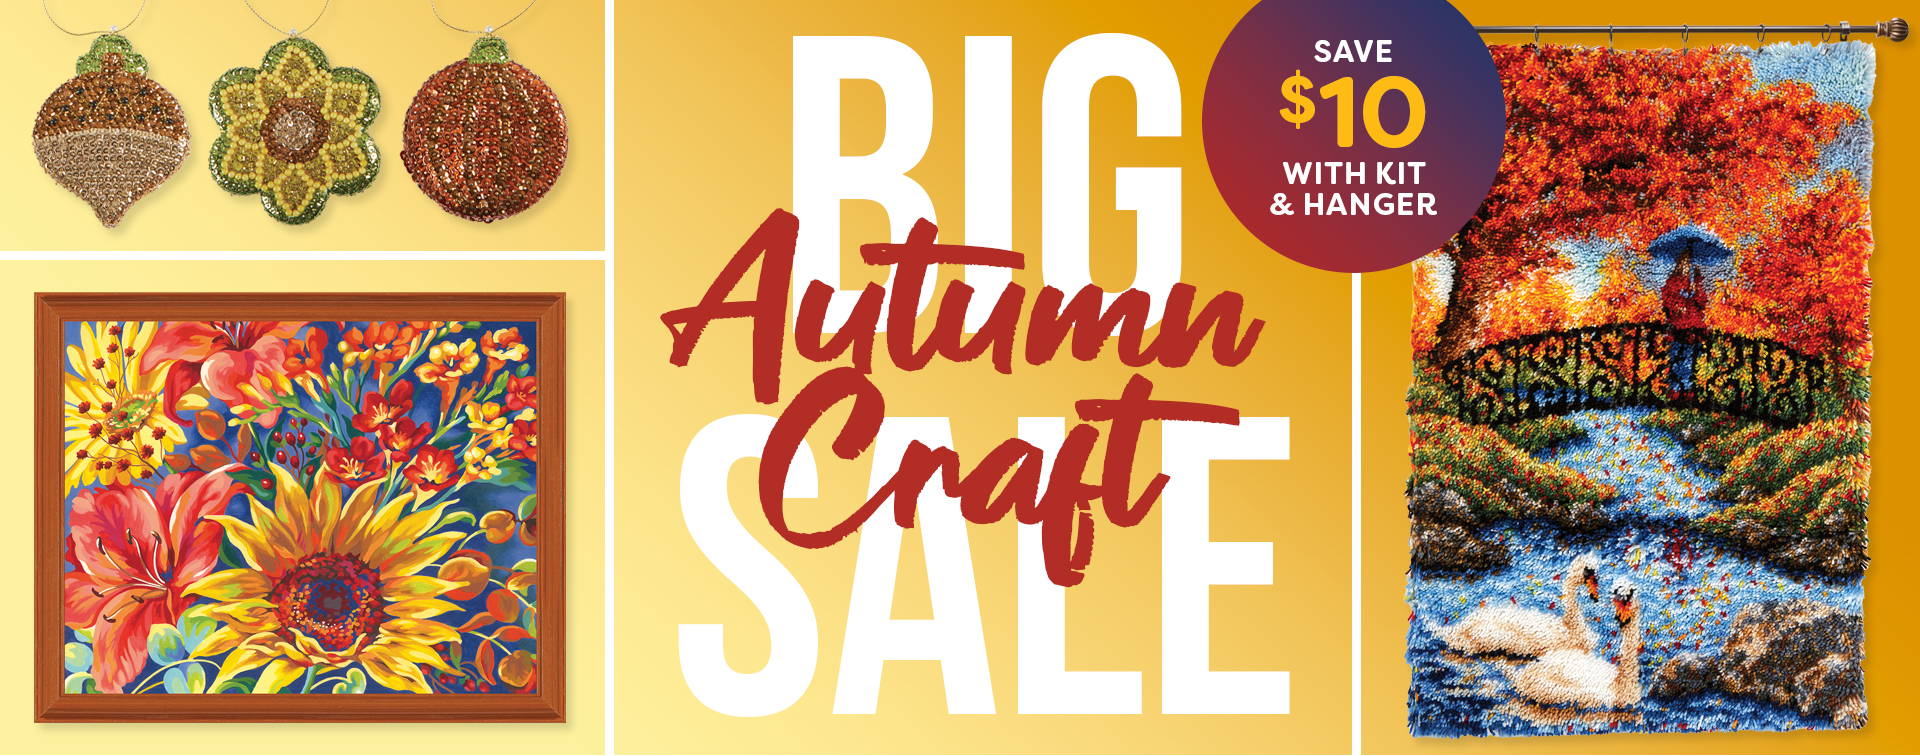 Big Autumn Craft Sale